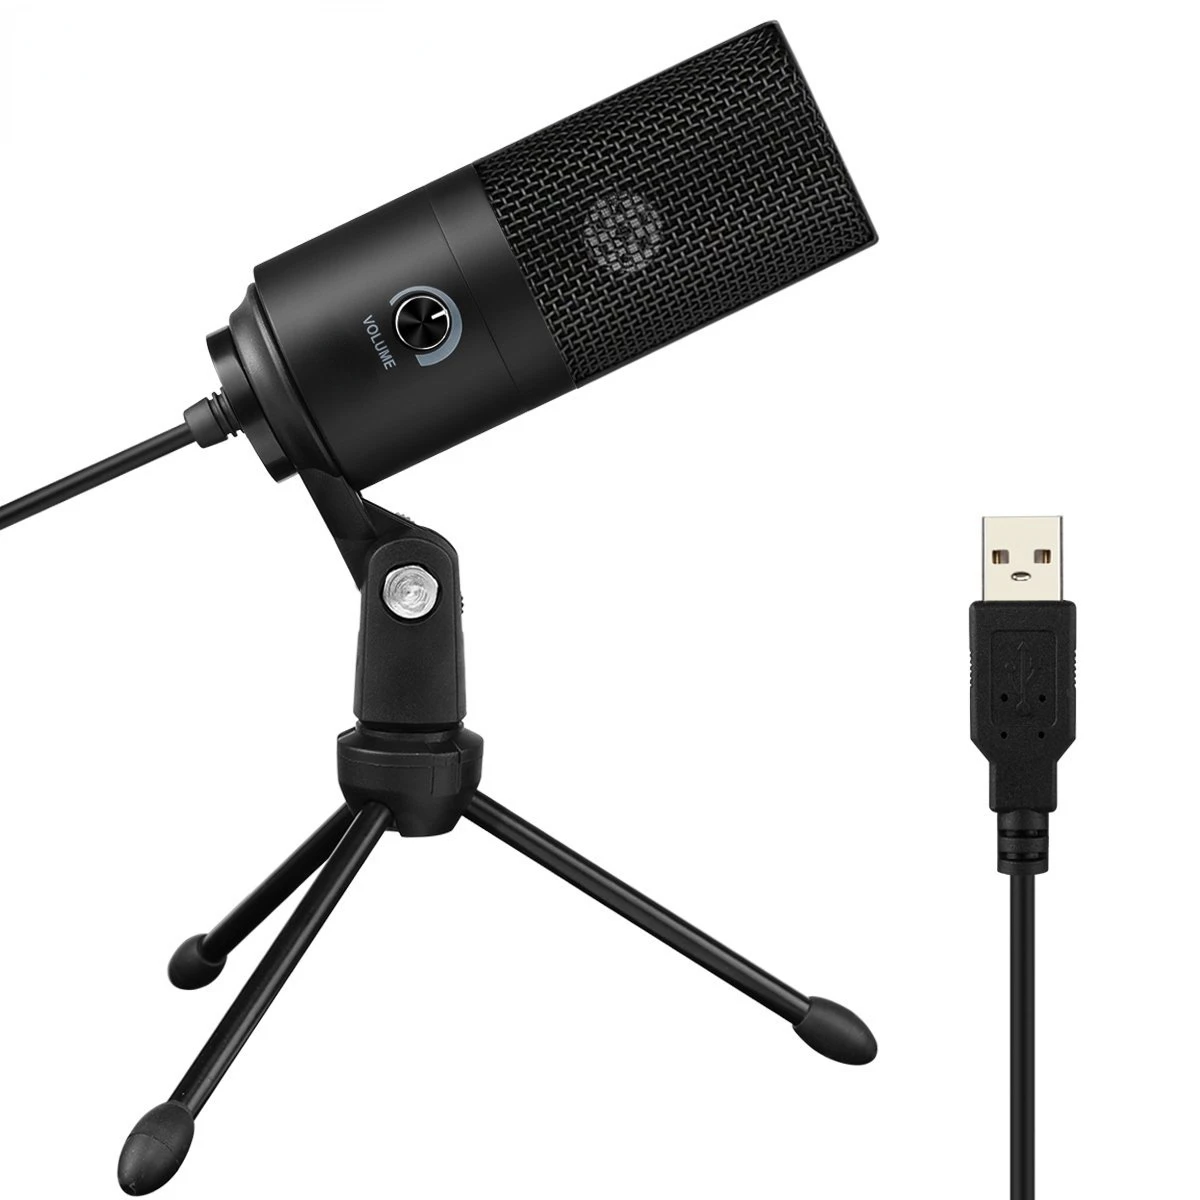 

2022 For Laptop Windows Cardioid Studio Recording Vocals Voice Over,Video-K669 Metal USB Condenser Recording Microphone